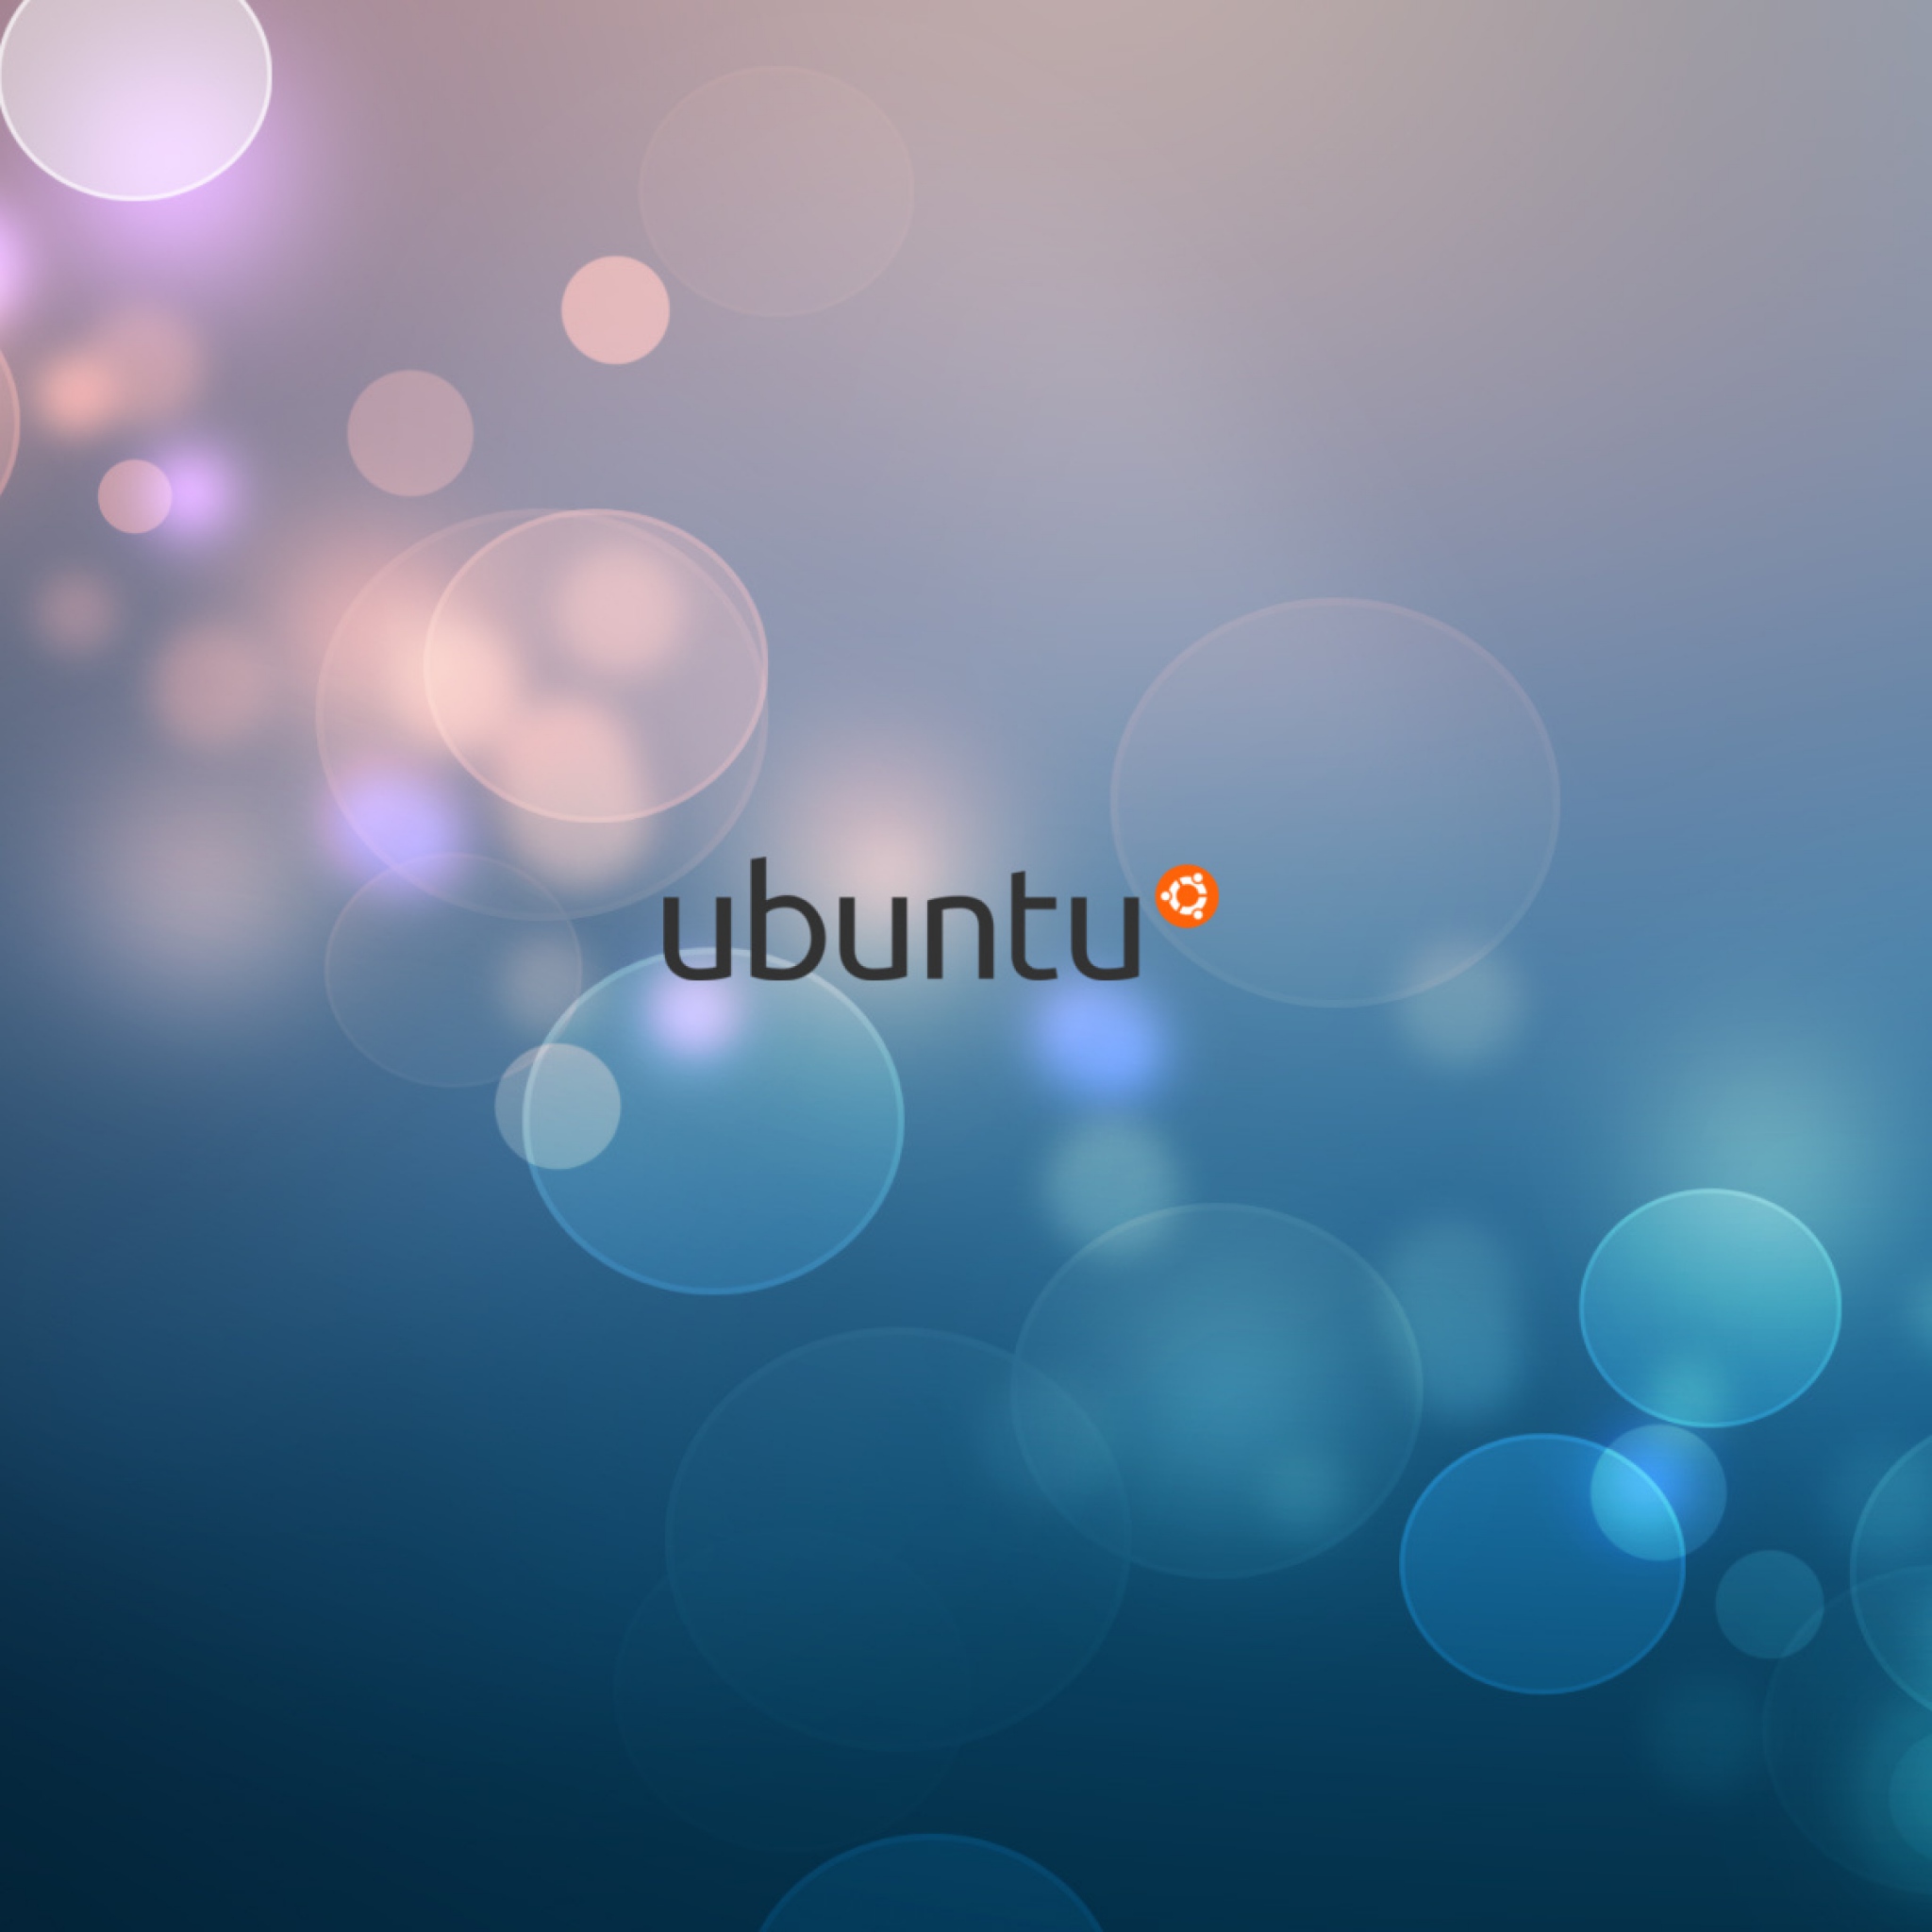 Ubuntu 18 10 S New Wallpaper Is Cosmically Cute Omg Ubuntu